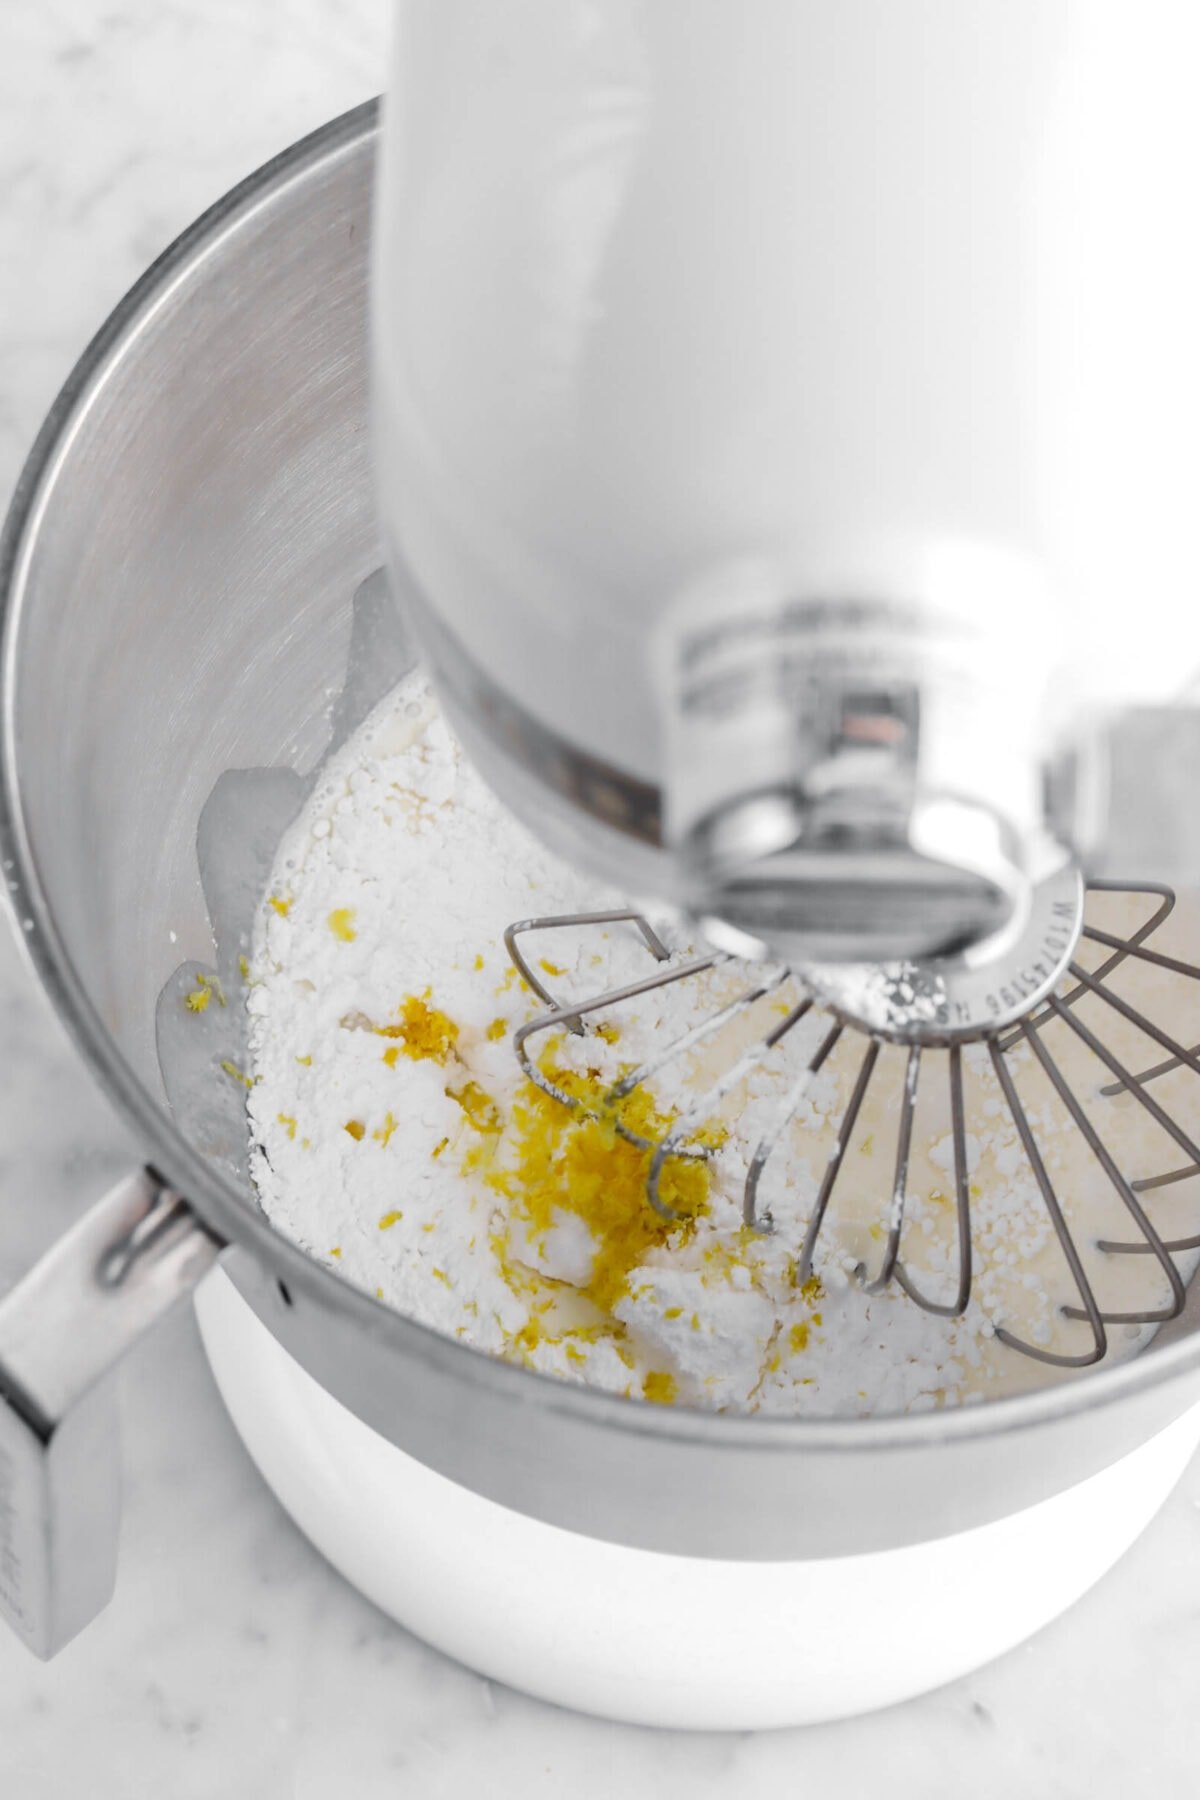 cream, powdered sugar, and lemon zest in stand mixer.